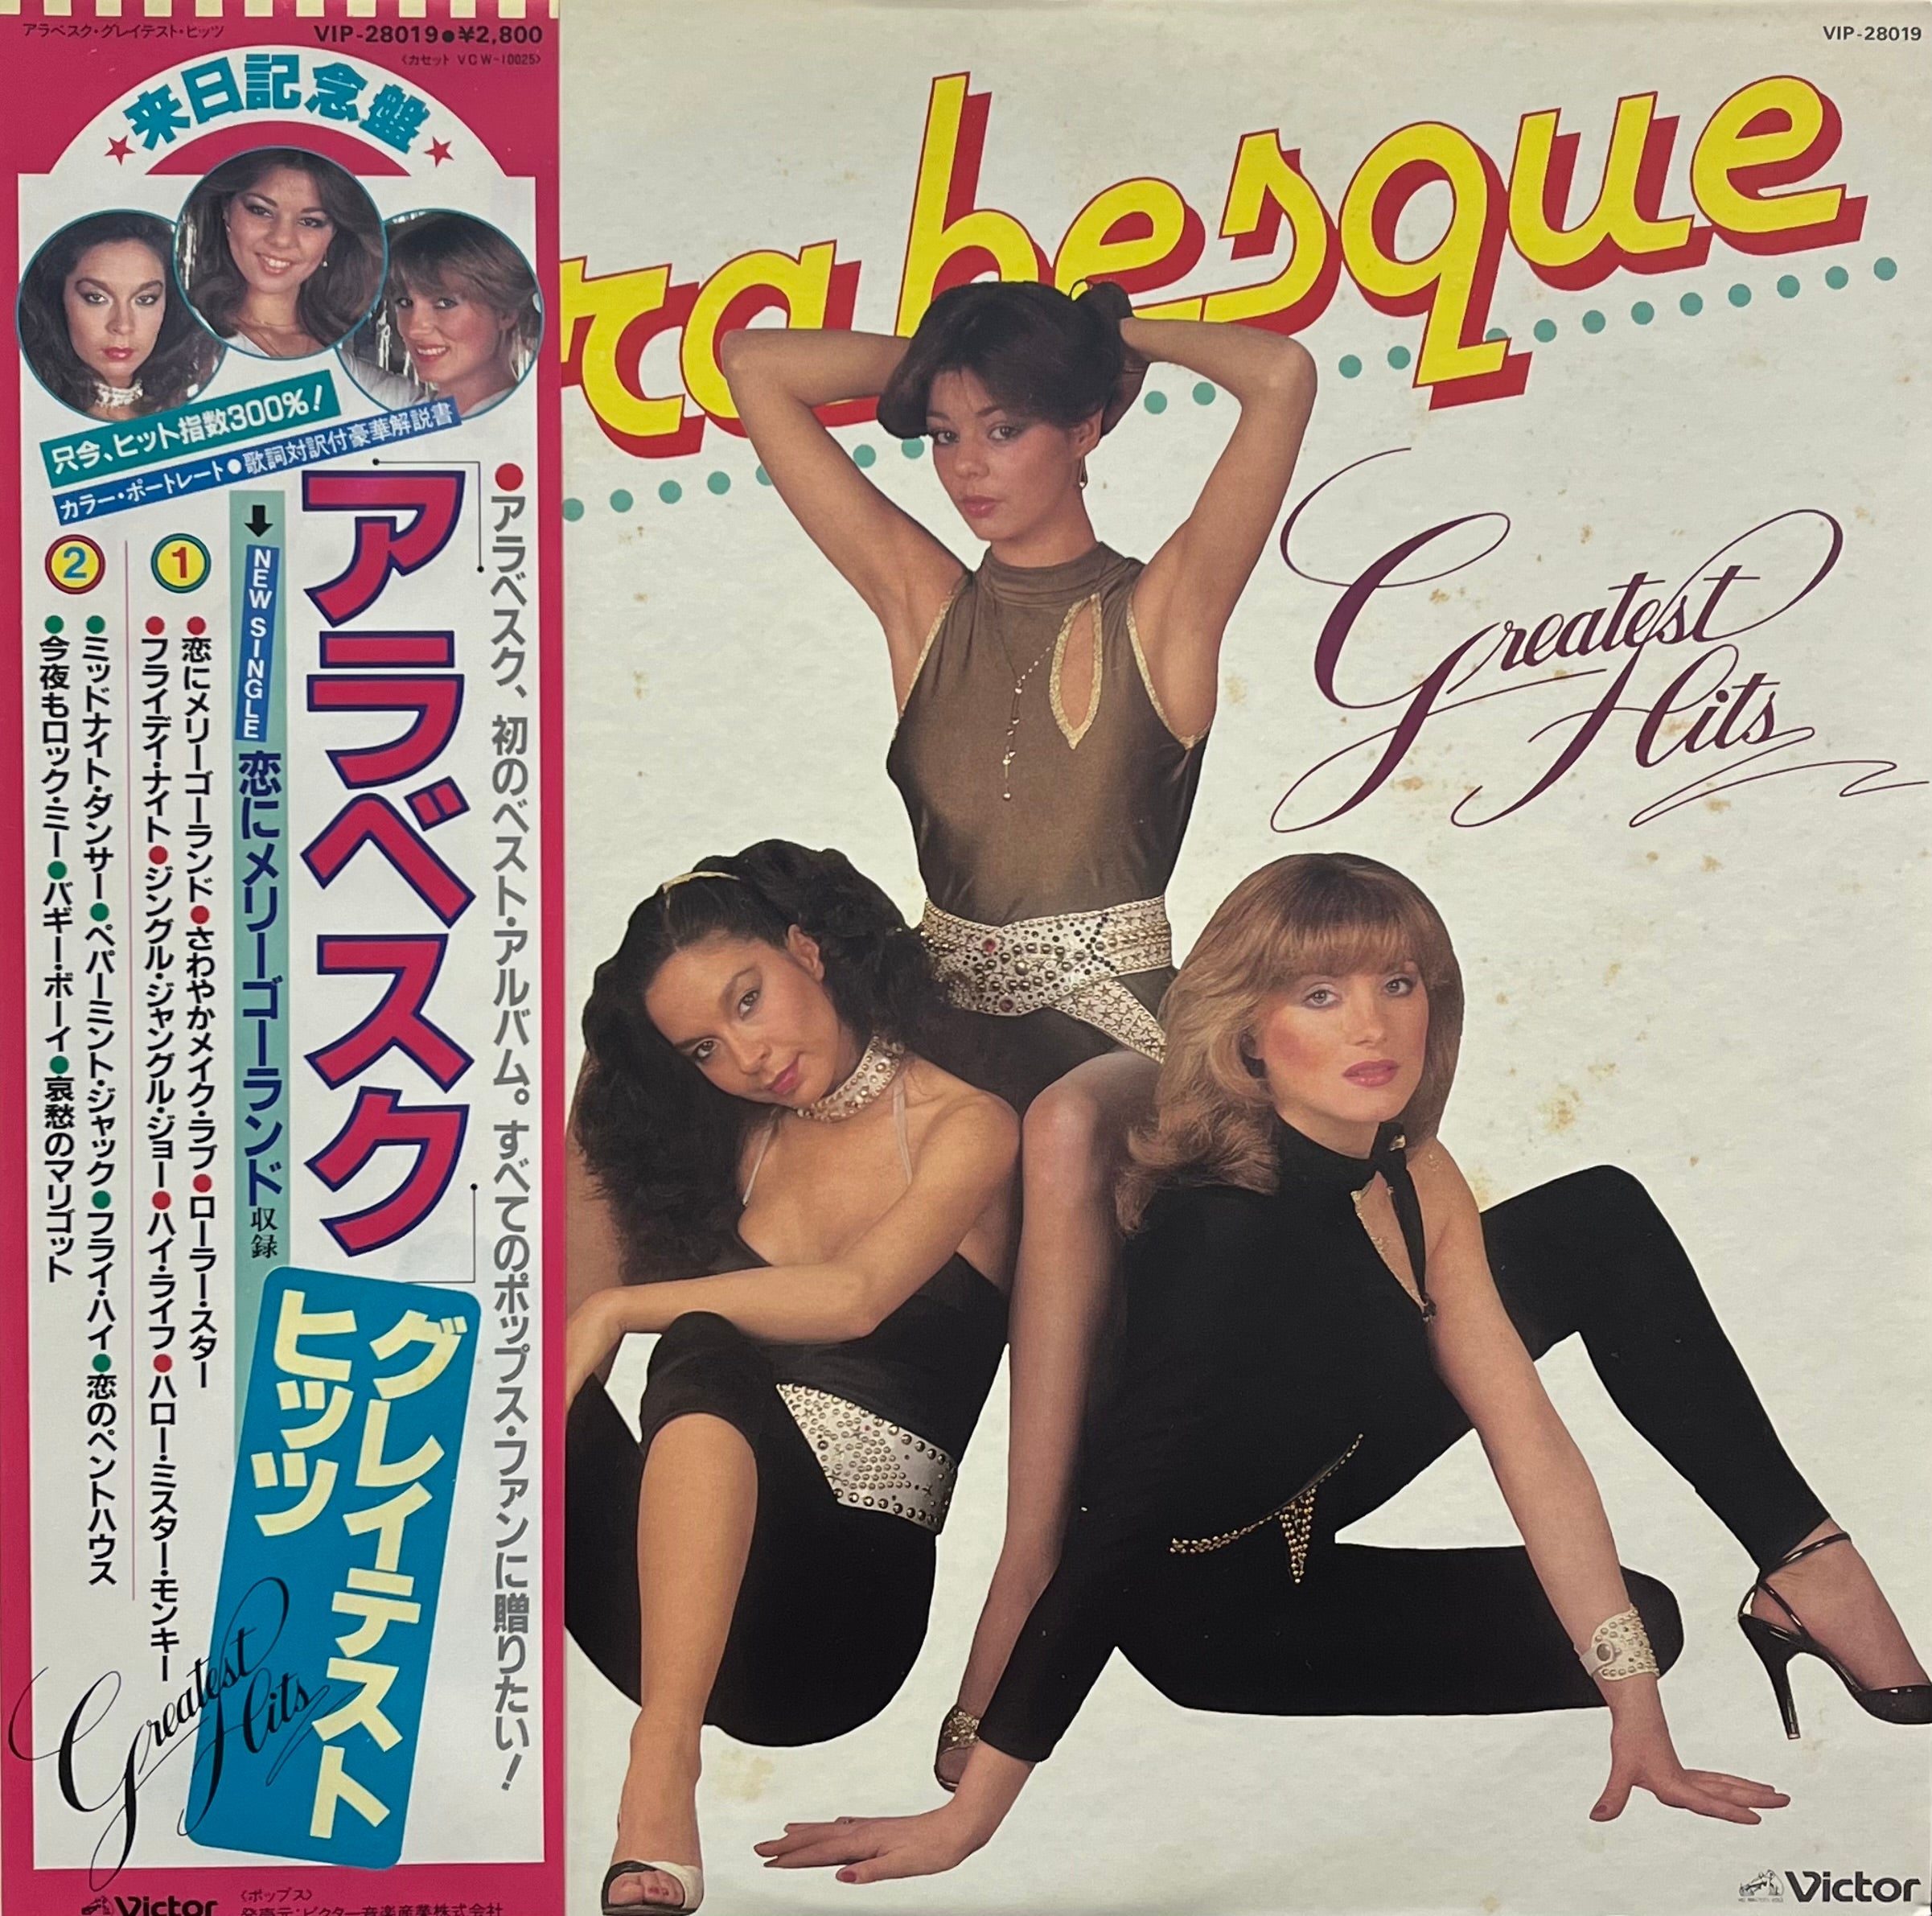 ARABESQUE / Greatest Hits (Victor – VIP 28019, LP) 帯付